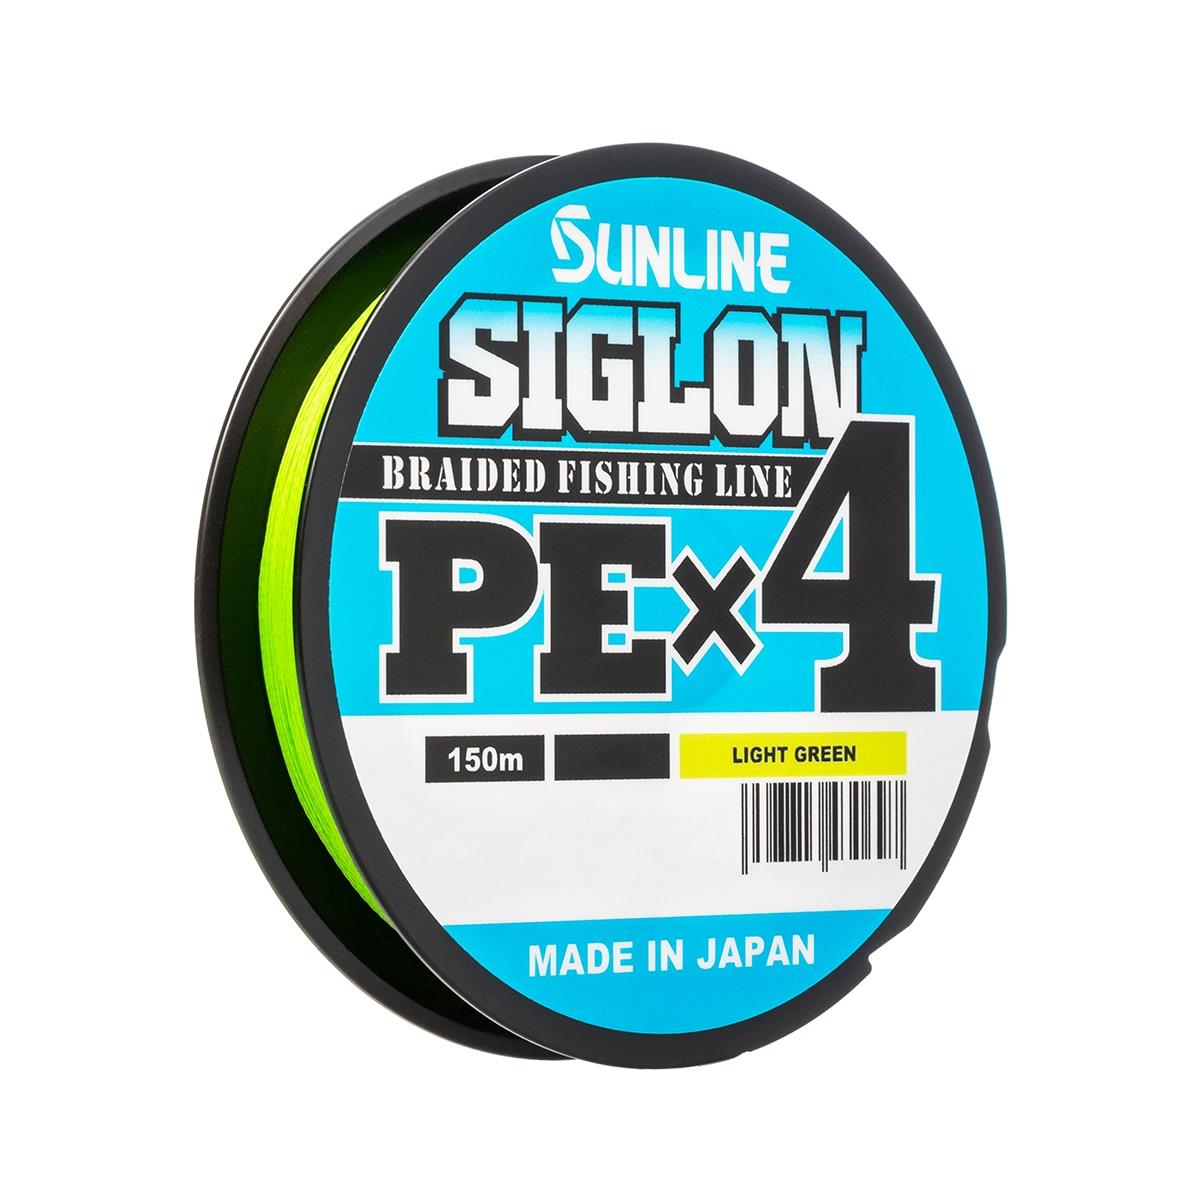 Шнур SIGLON PE×4 150 м (Light green) Sunline шнур siglon pe×4 150 м orange sunline